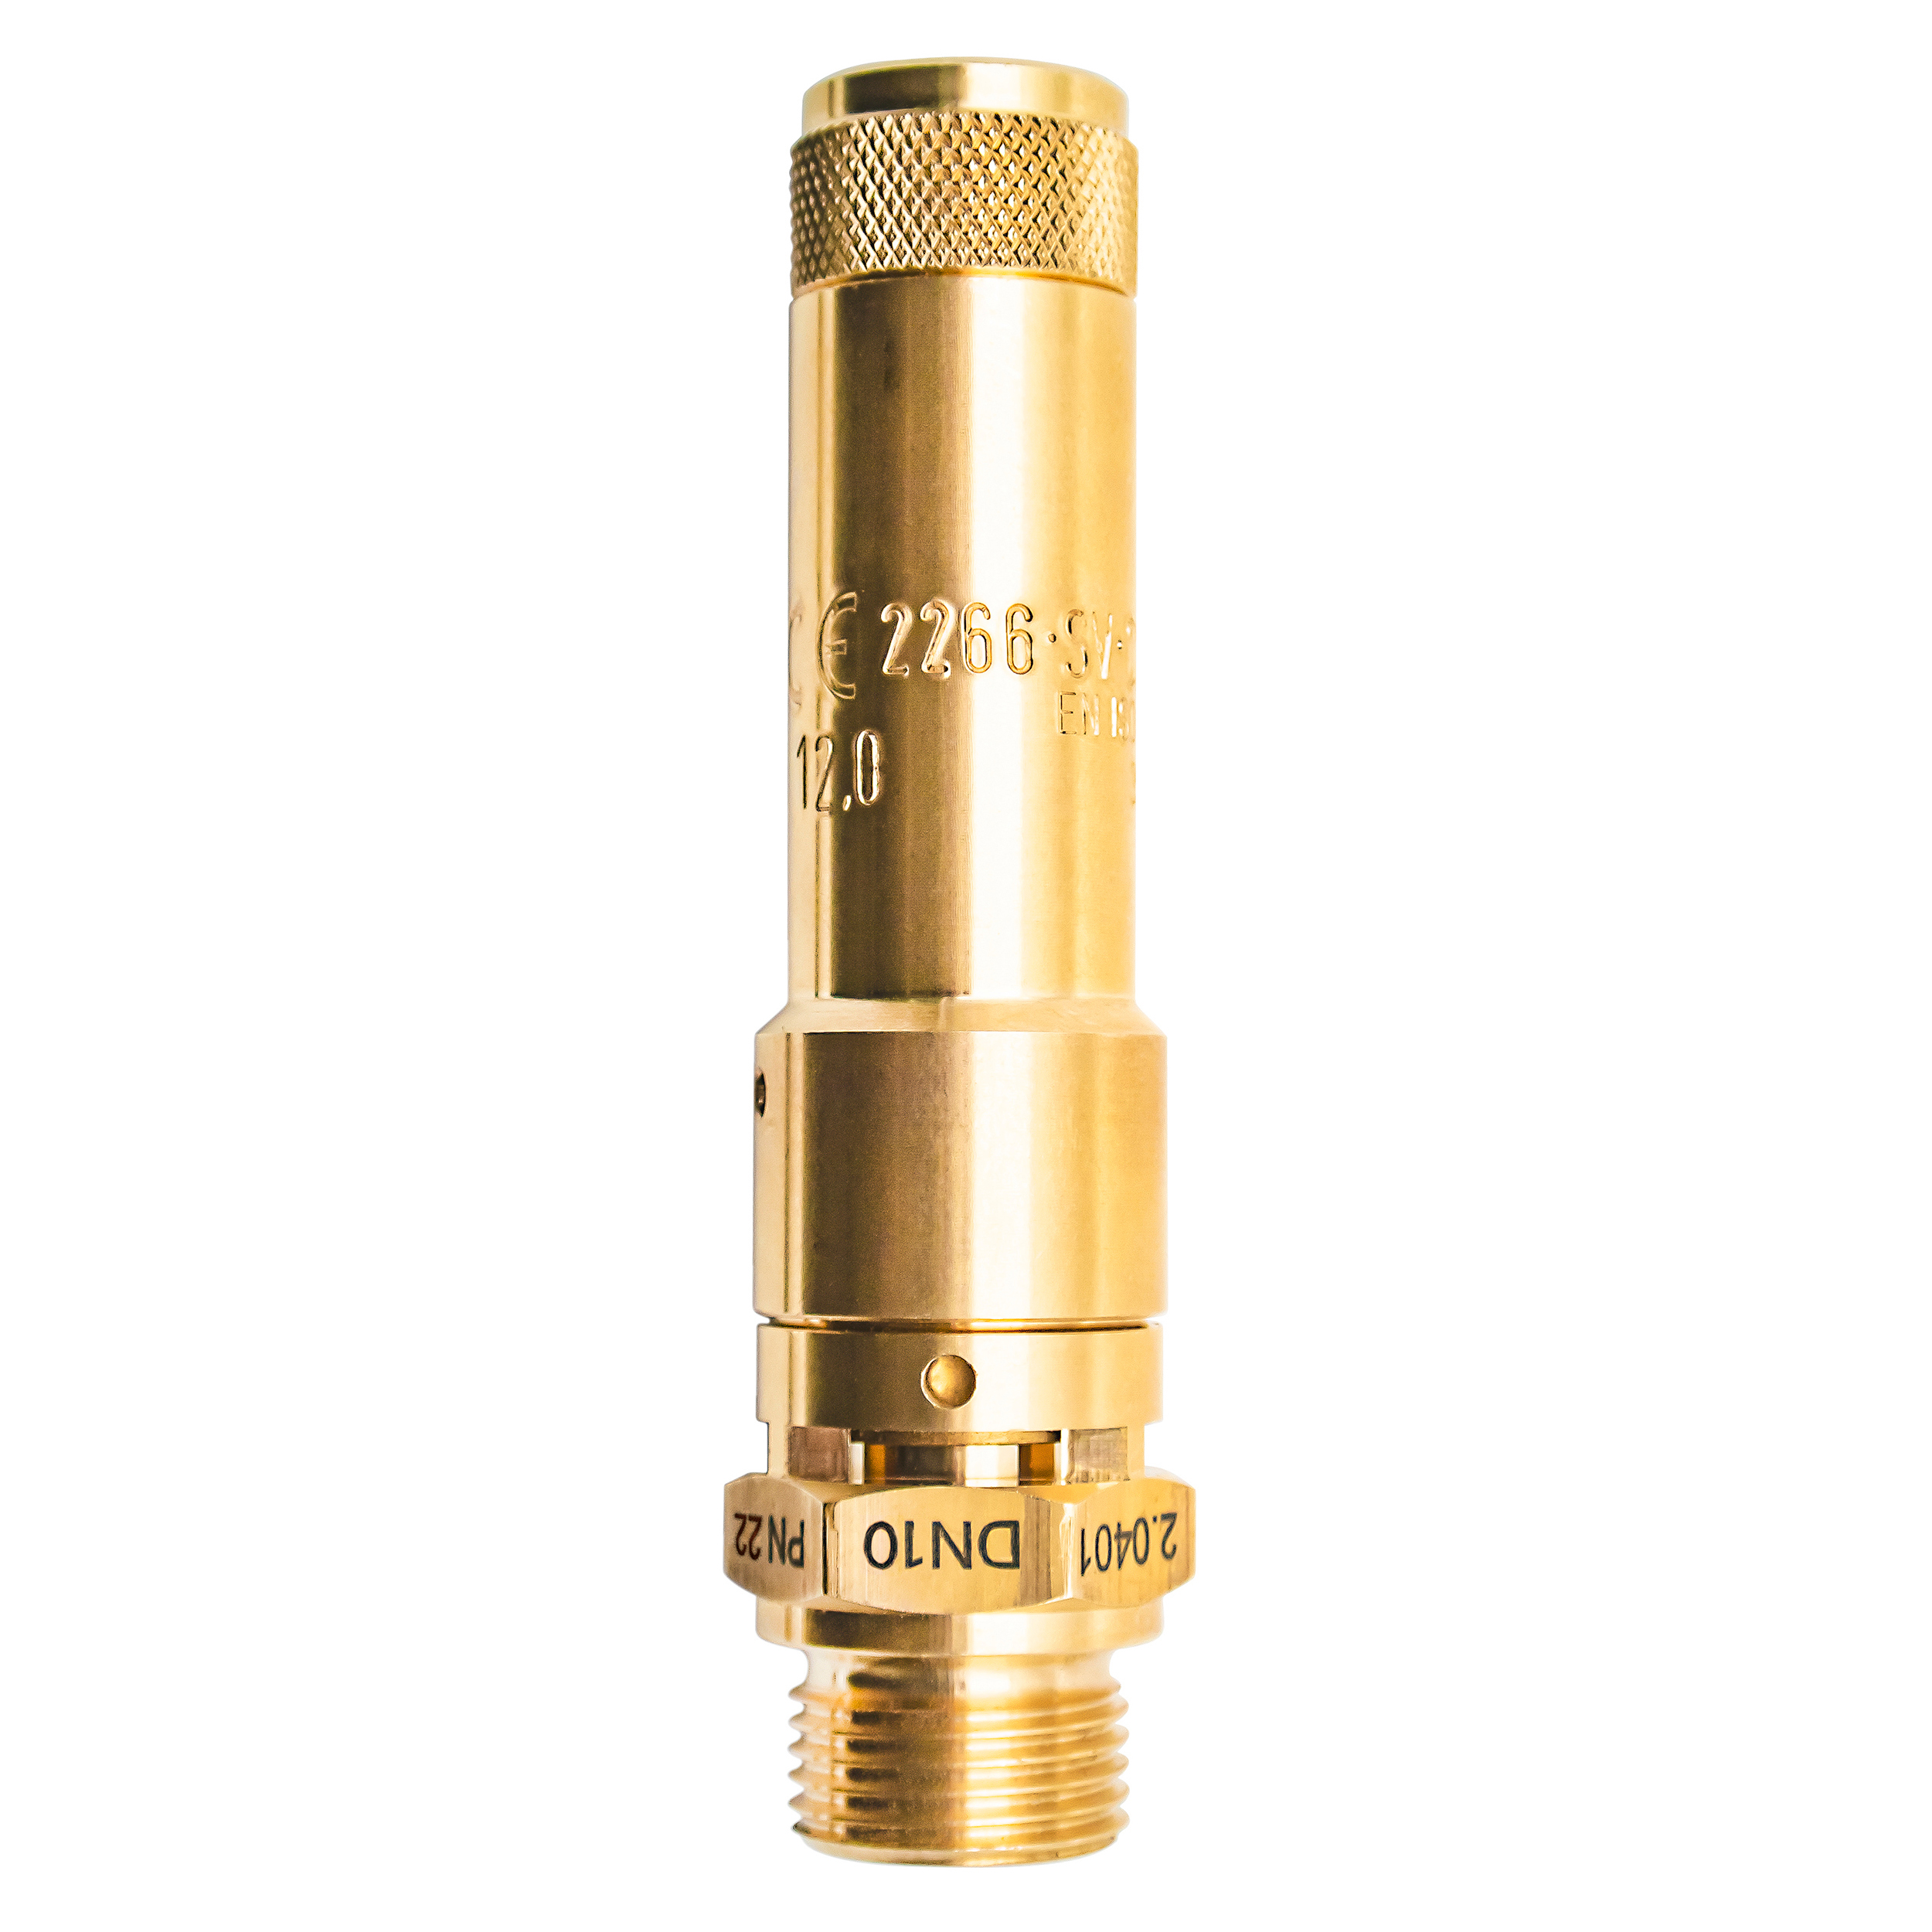 Component-tested safety valve DN 10, G½, pressure: 16.1-22 bar